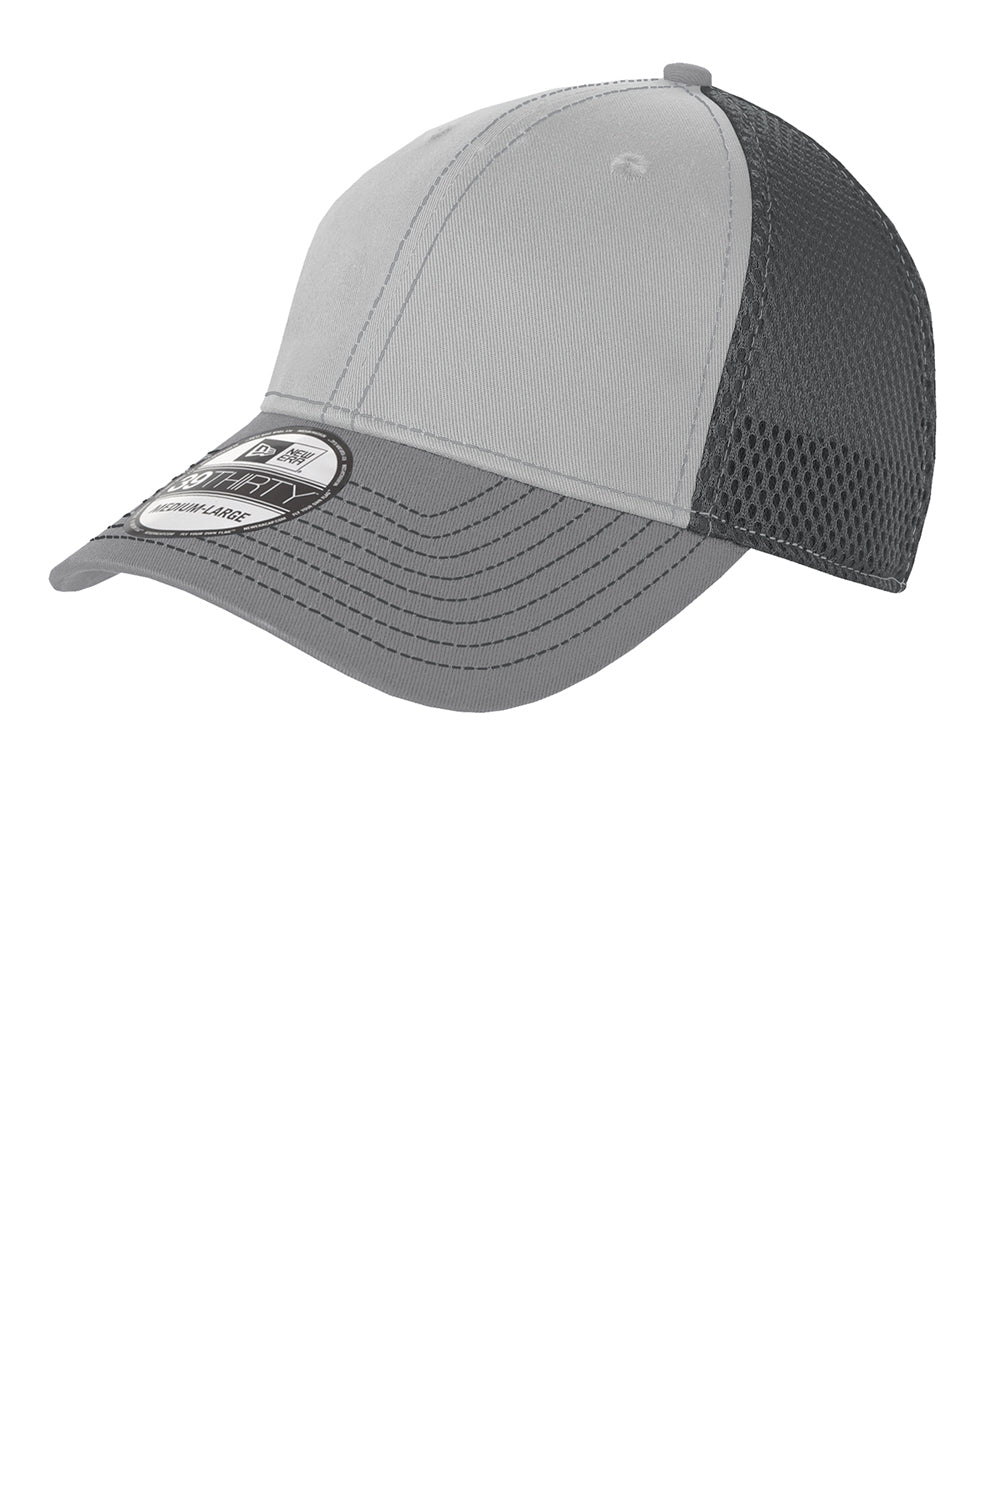 New Era NE1120 Mens Stretch Fit Hat Grey/Steel Grey/Graphite Grey Front